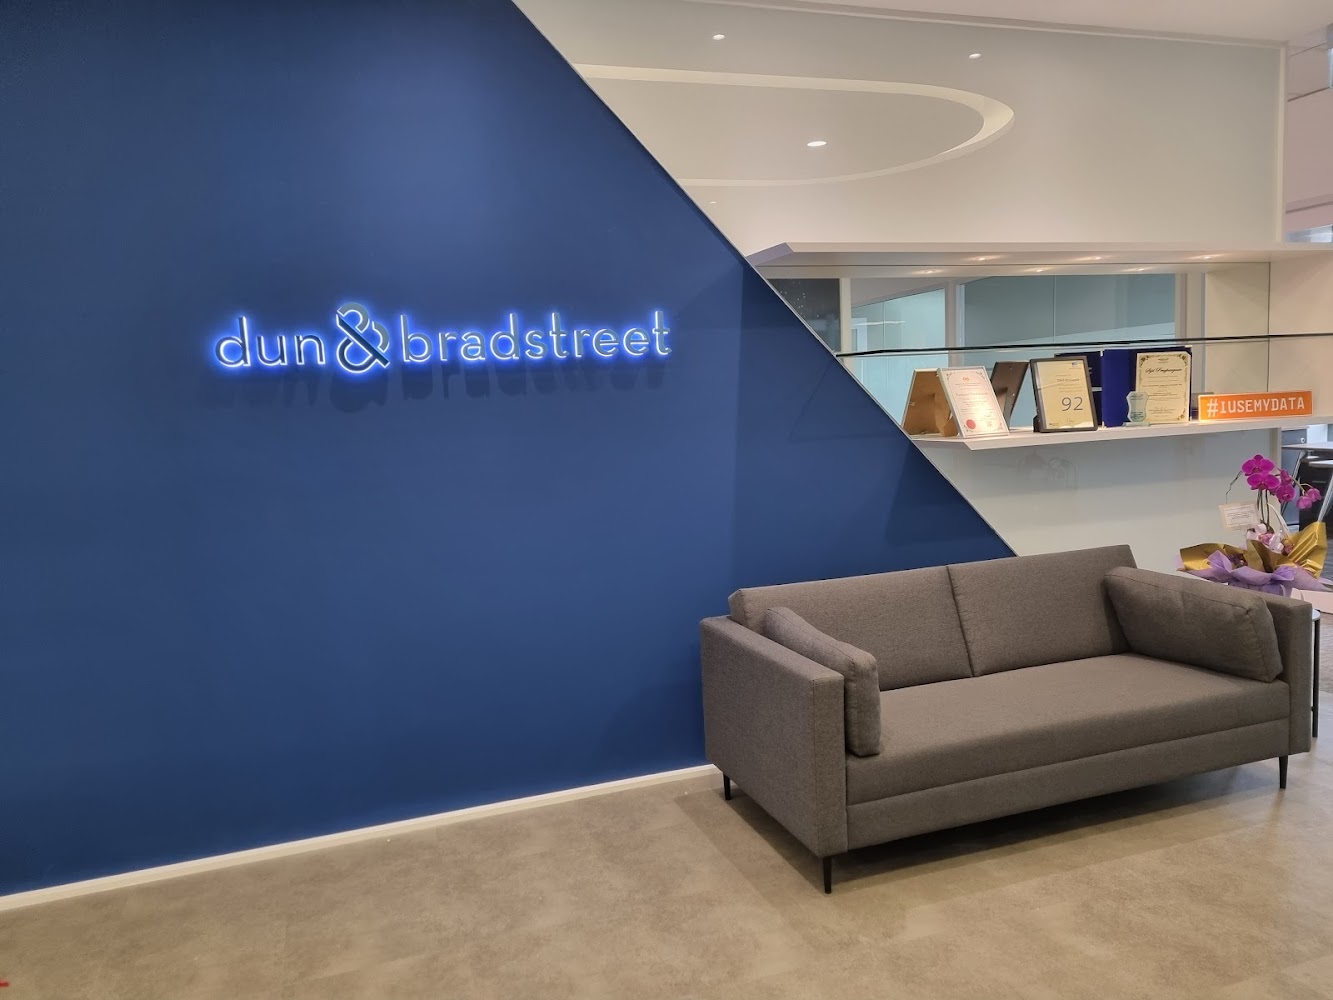 Dun & Bradstreet (D&B) Malaysia Sdn Bhd